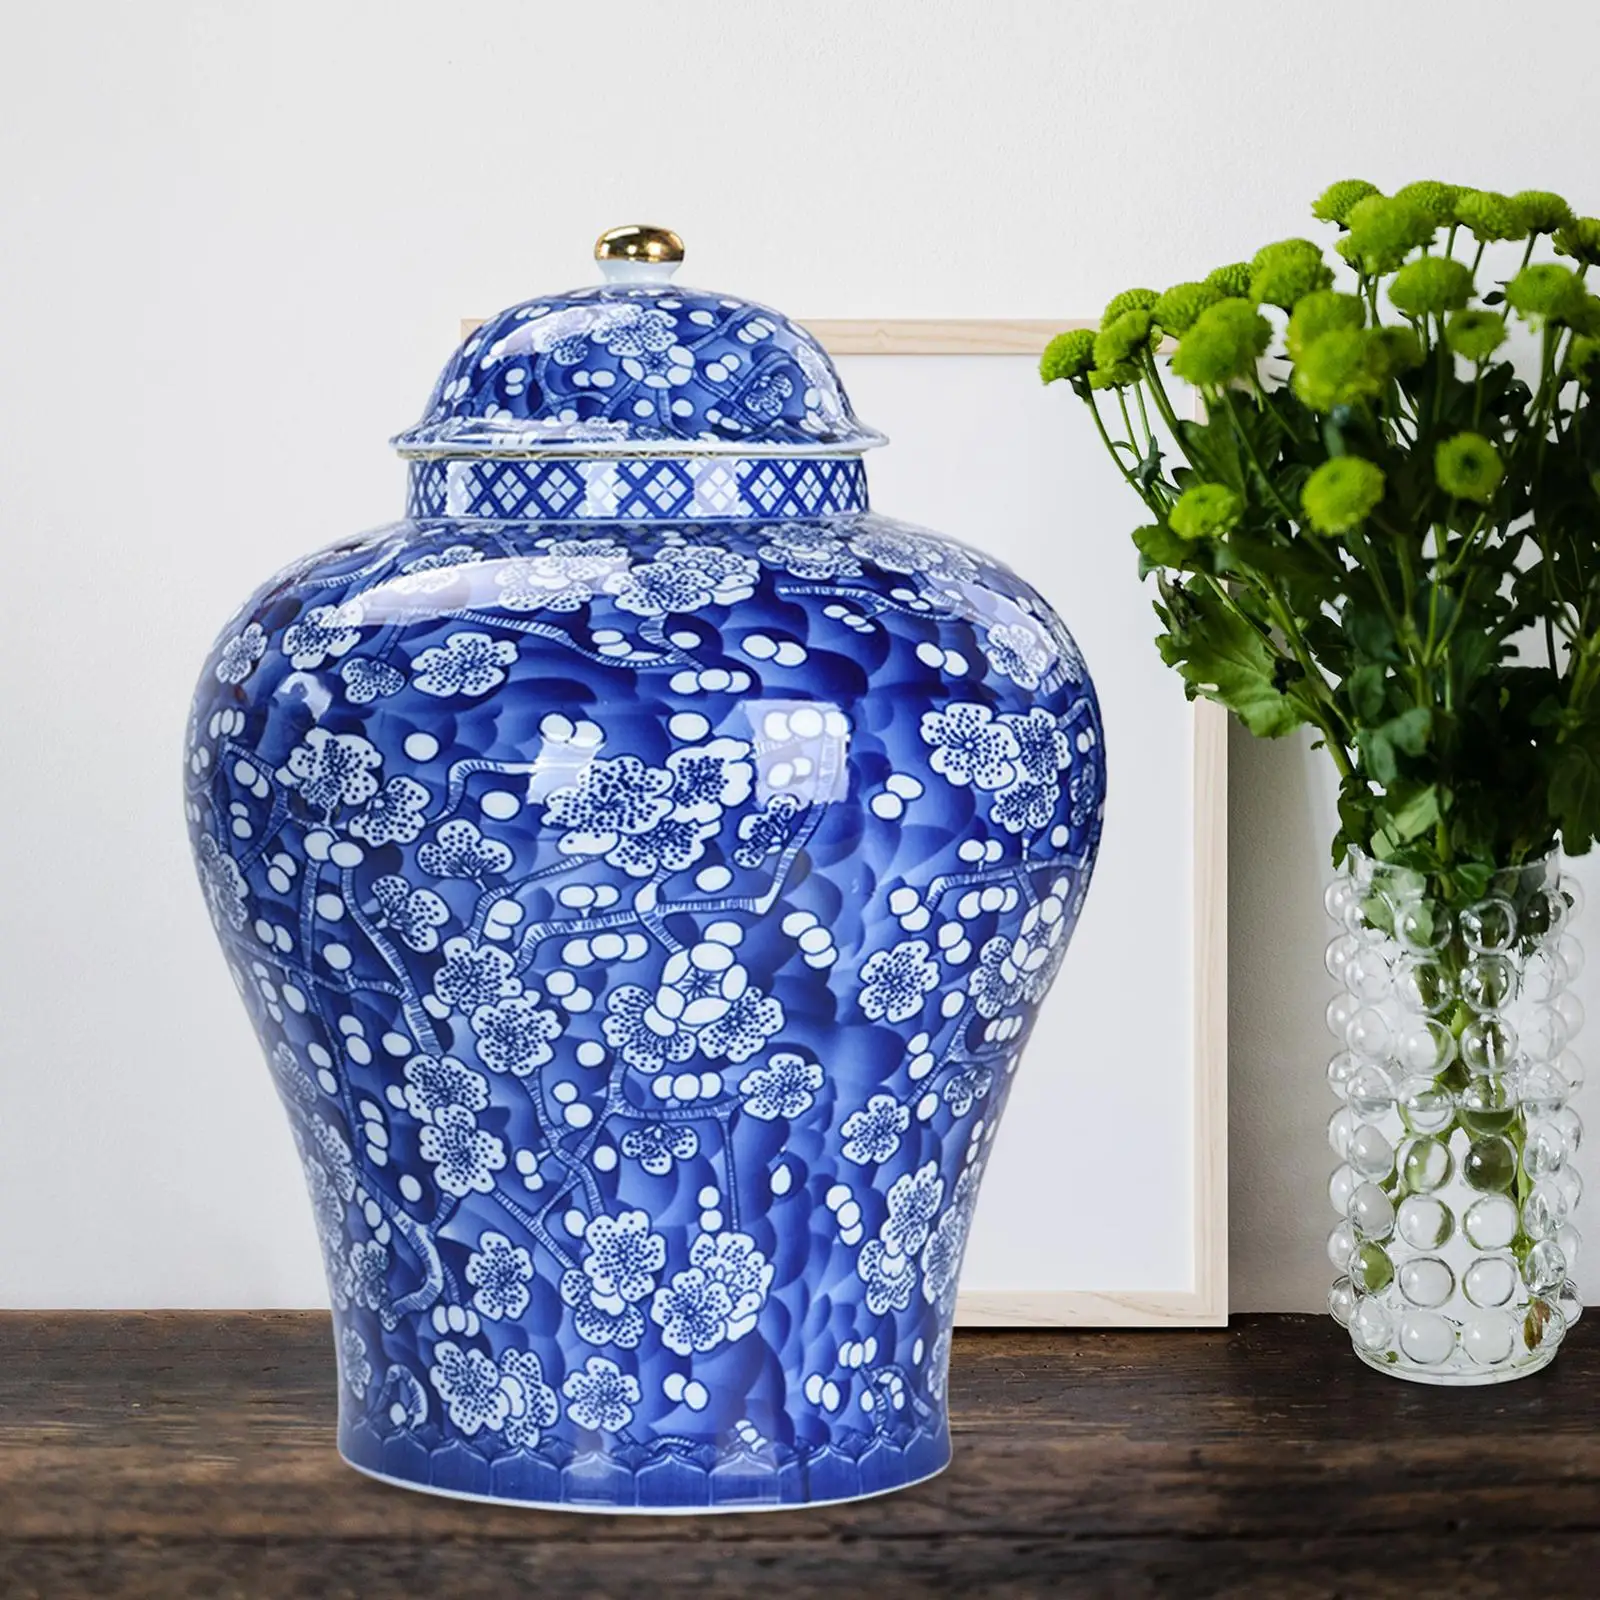 Mandarin Plum Porcelain Vase, Ginger Jar Temple Jar Blue and  Your  Decorative Classical Home  Piece Glazed